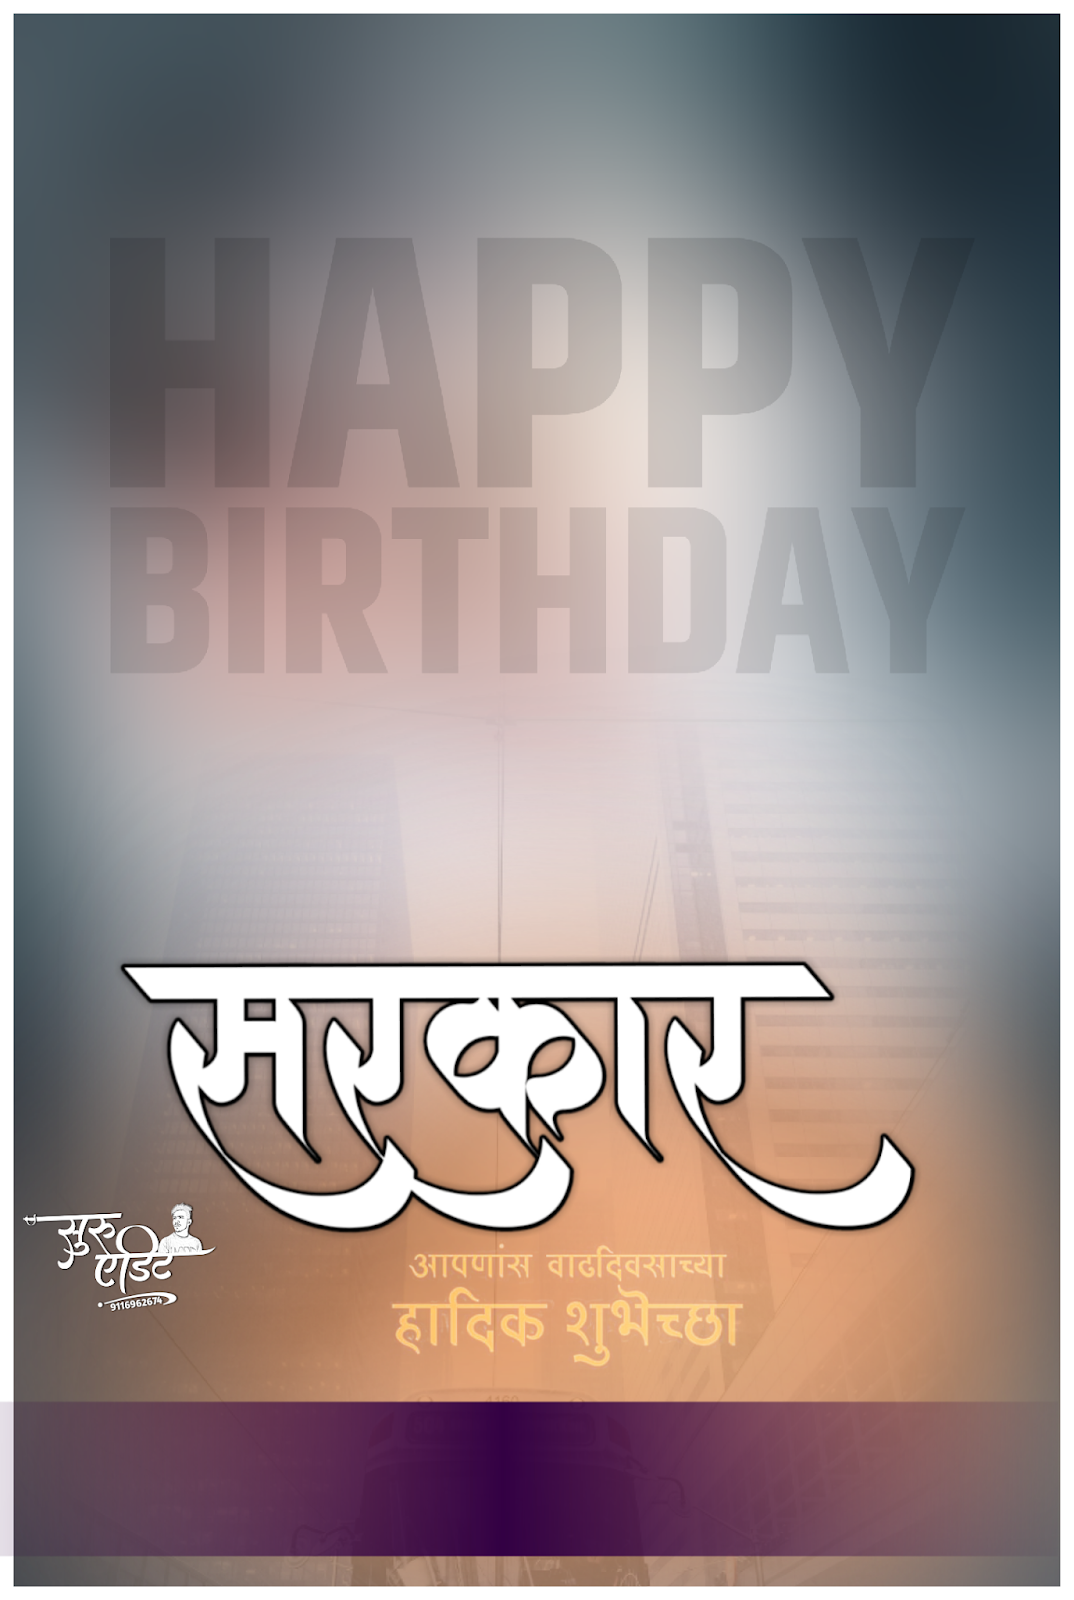 Happy birthday banner in marathi | Happy birthday posters, Hd happy birthday  images, Happy birthday banners